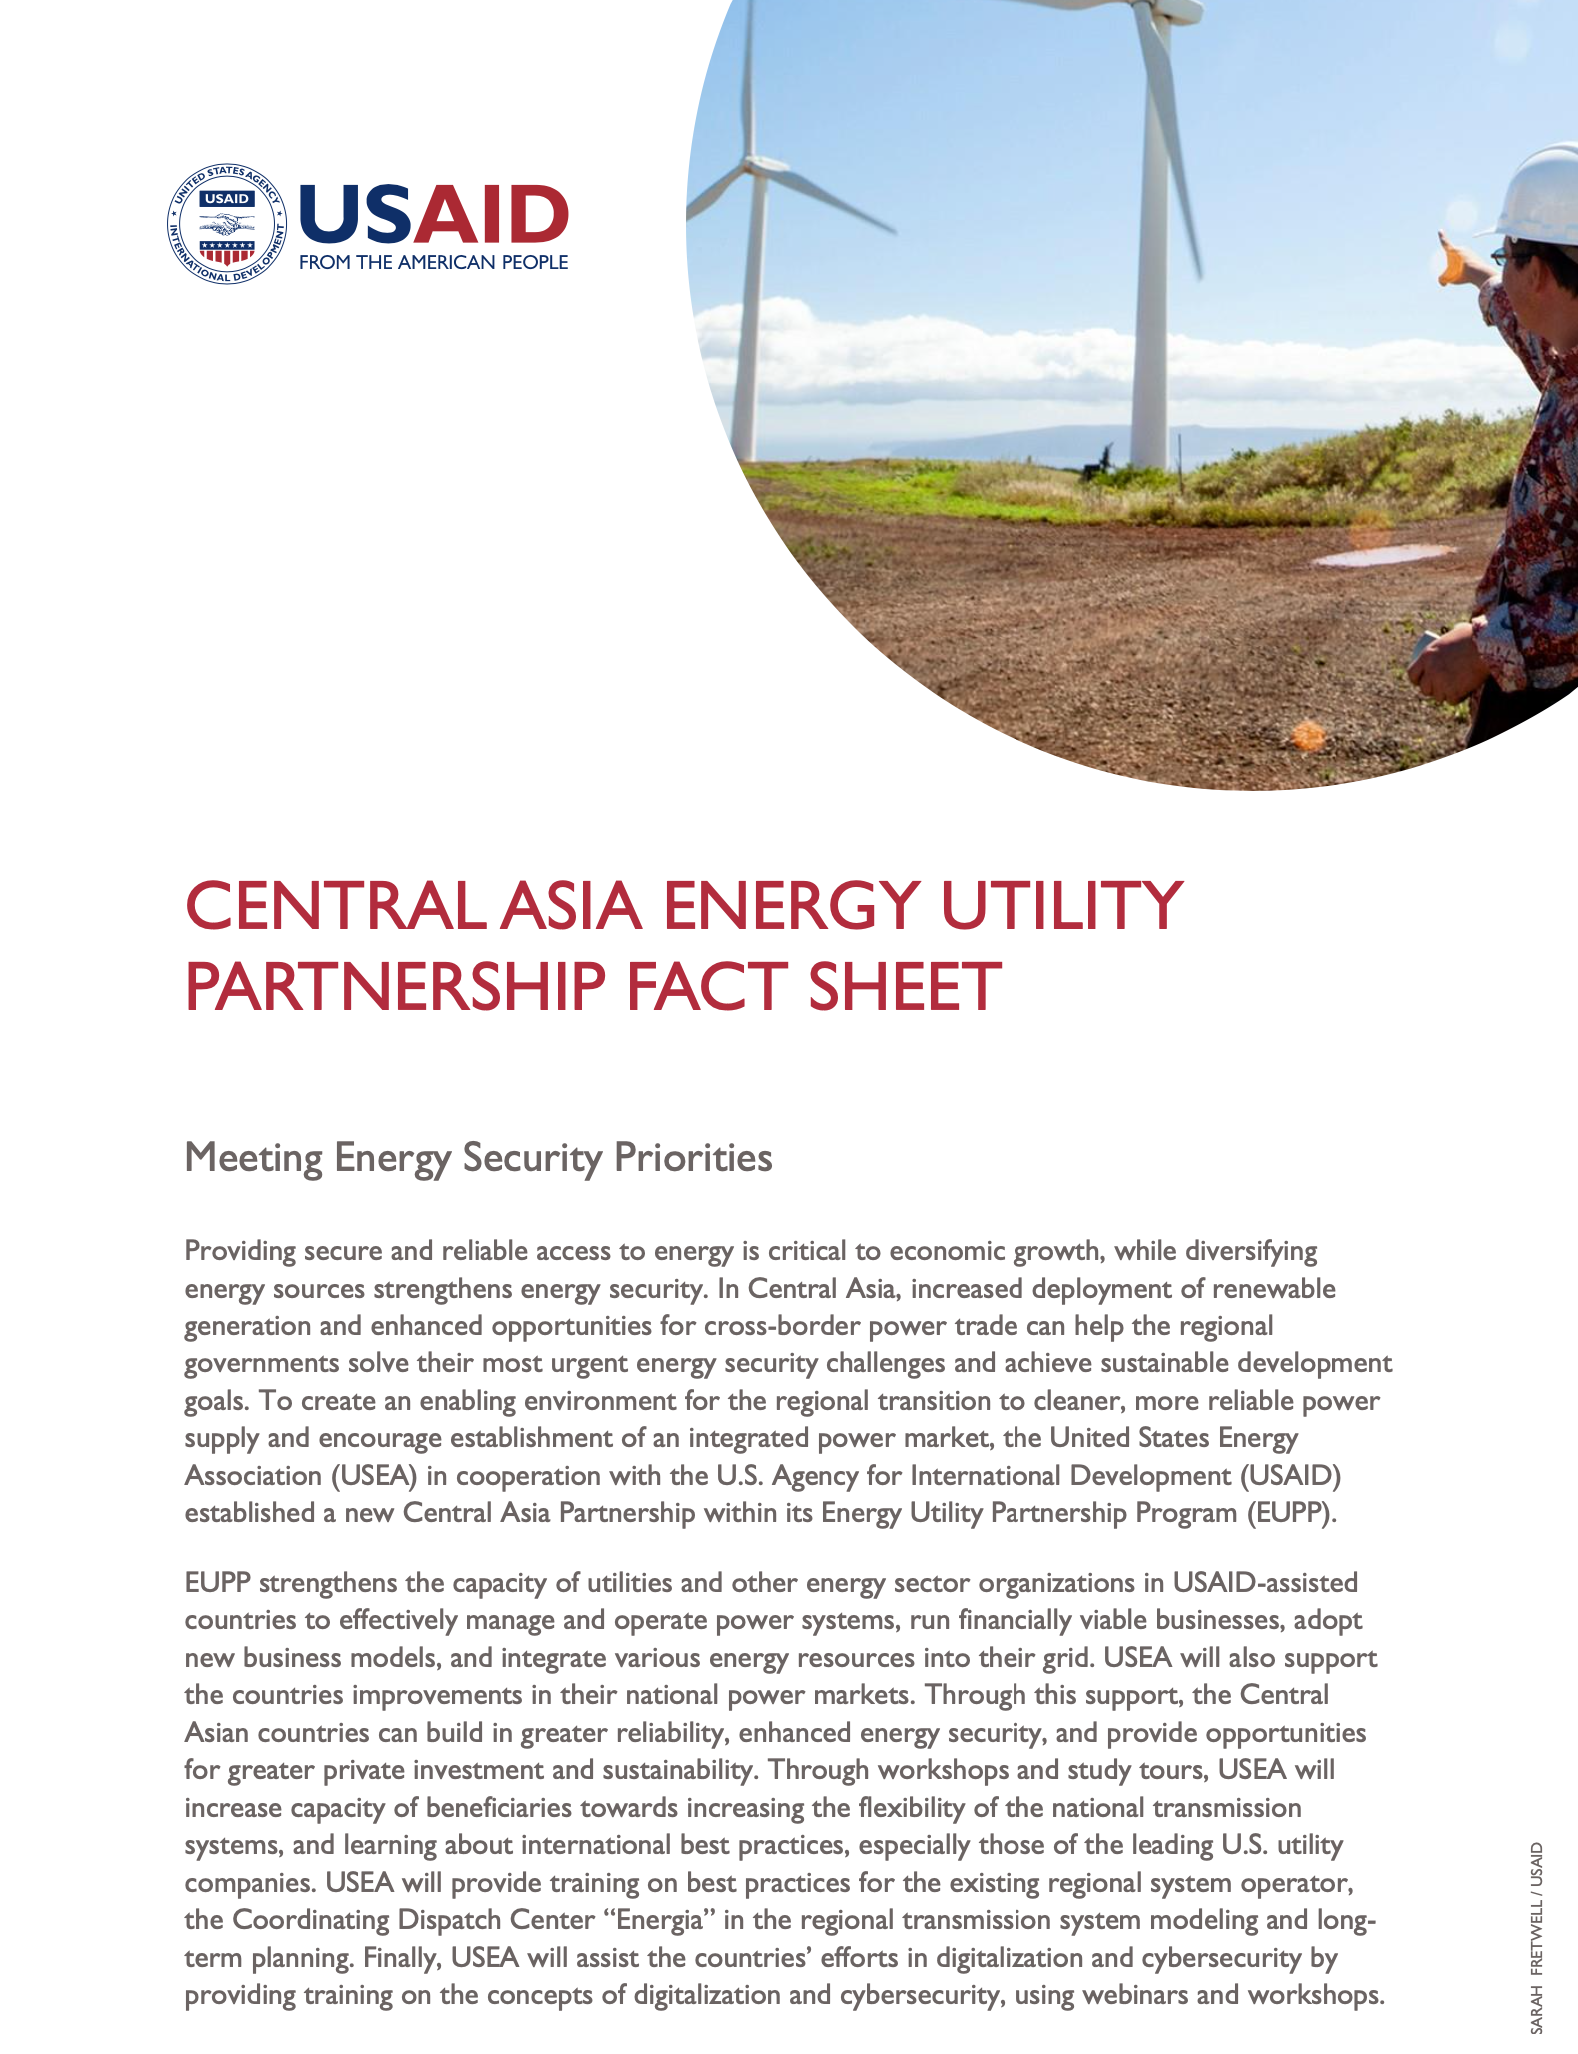 Central Asia Energy Utility Partnership Fact Sheet